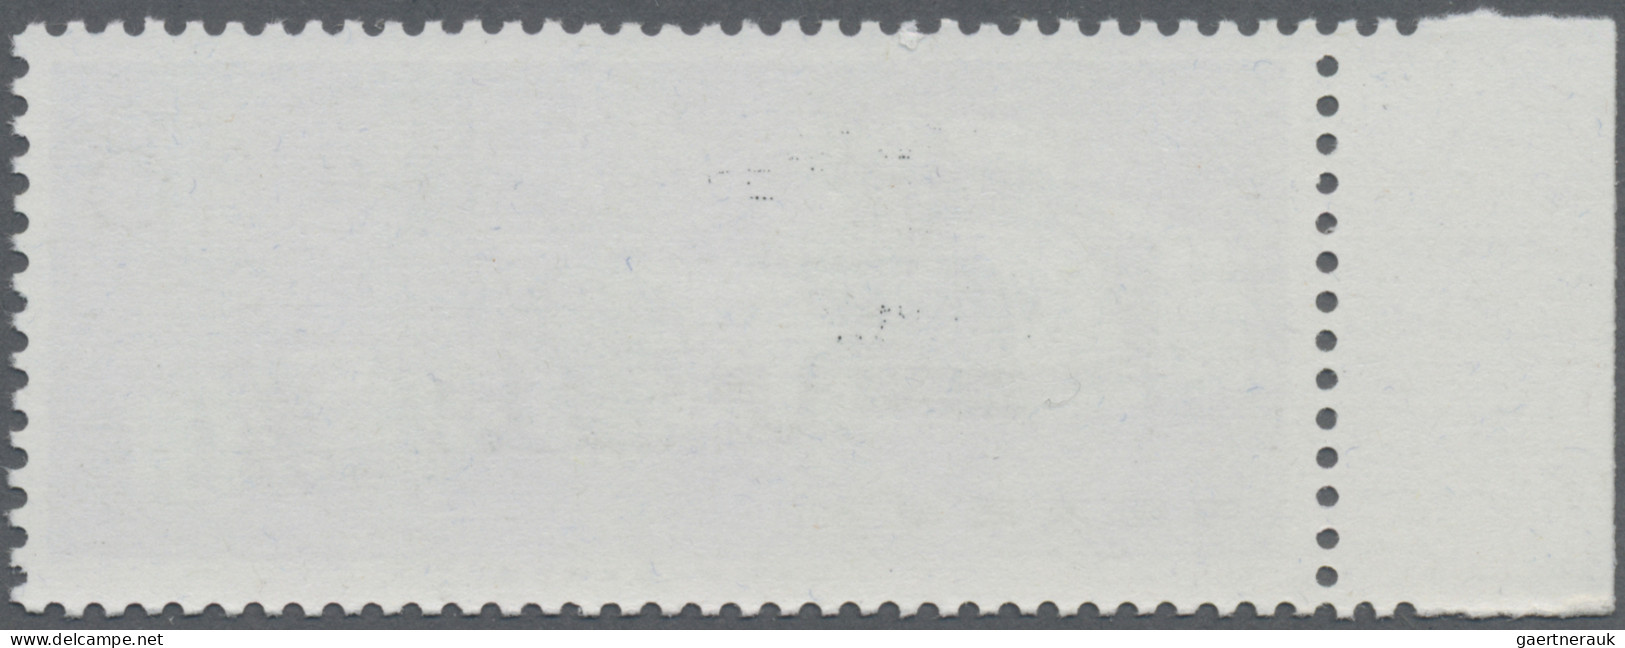 China (PRC): 1974, Machine Construction Set (N78-81),MNH, With Margin, Stamp B1 - Nuevos